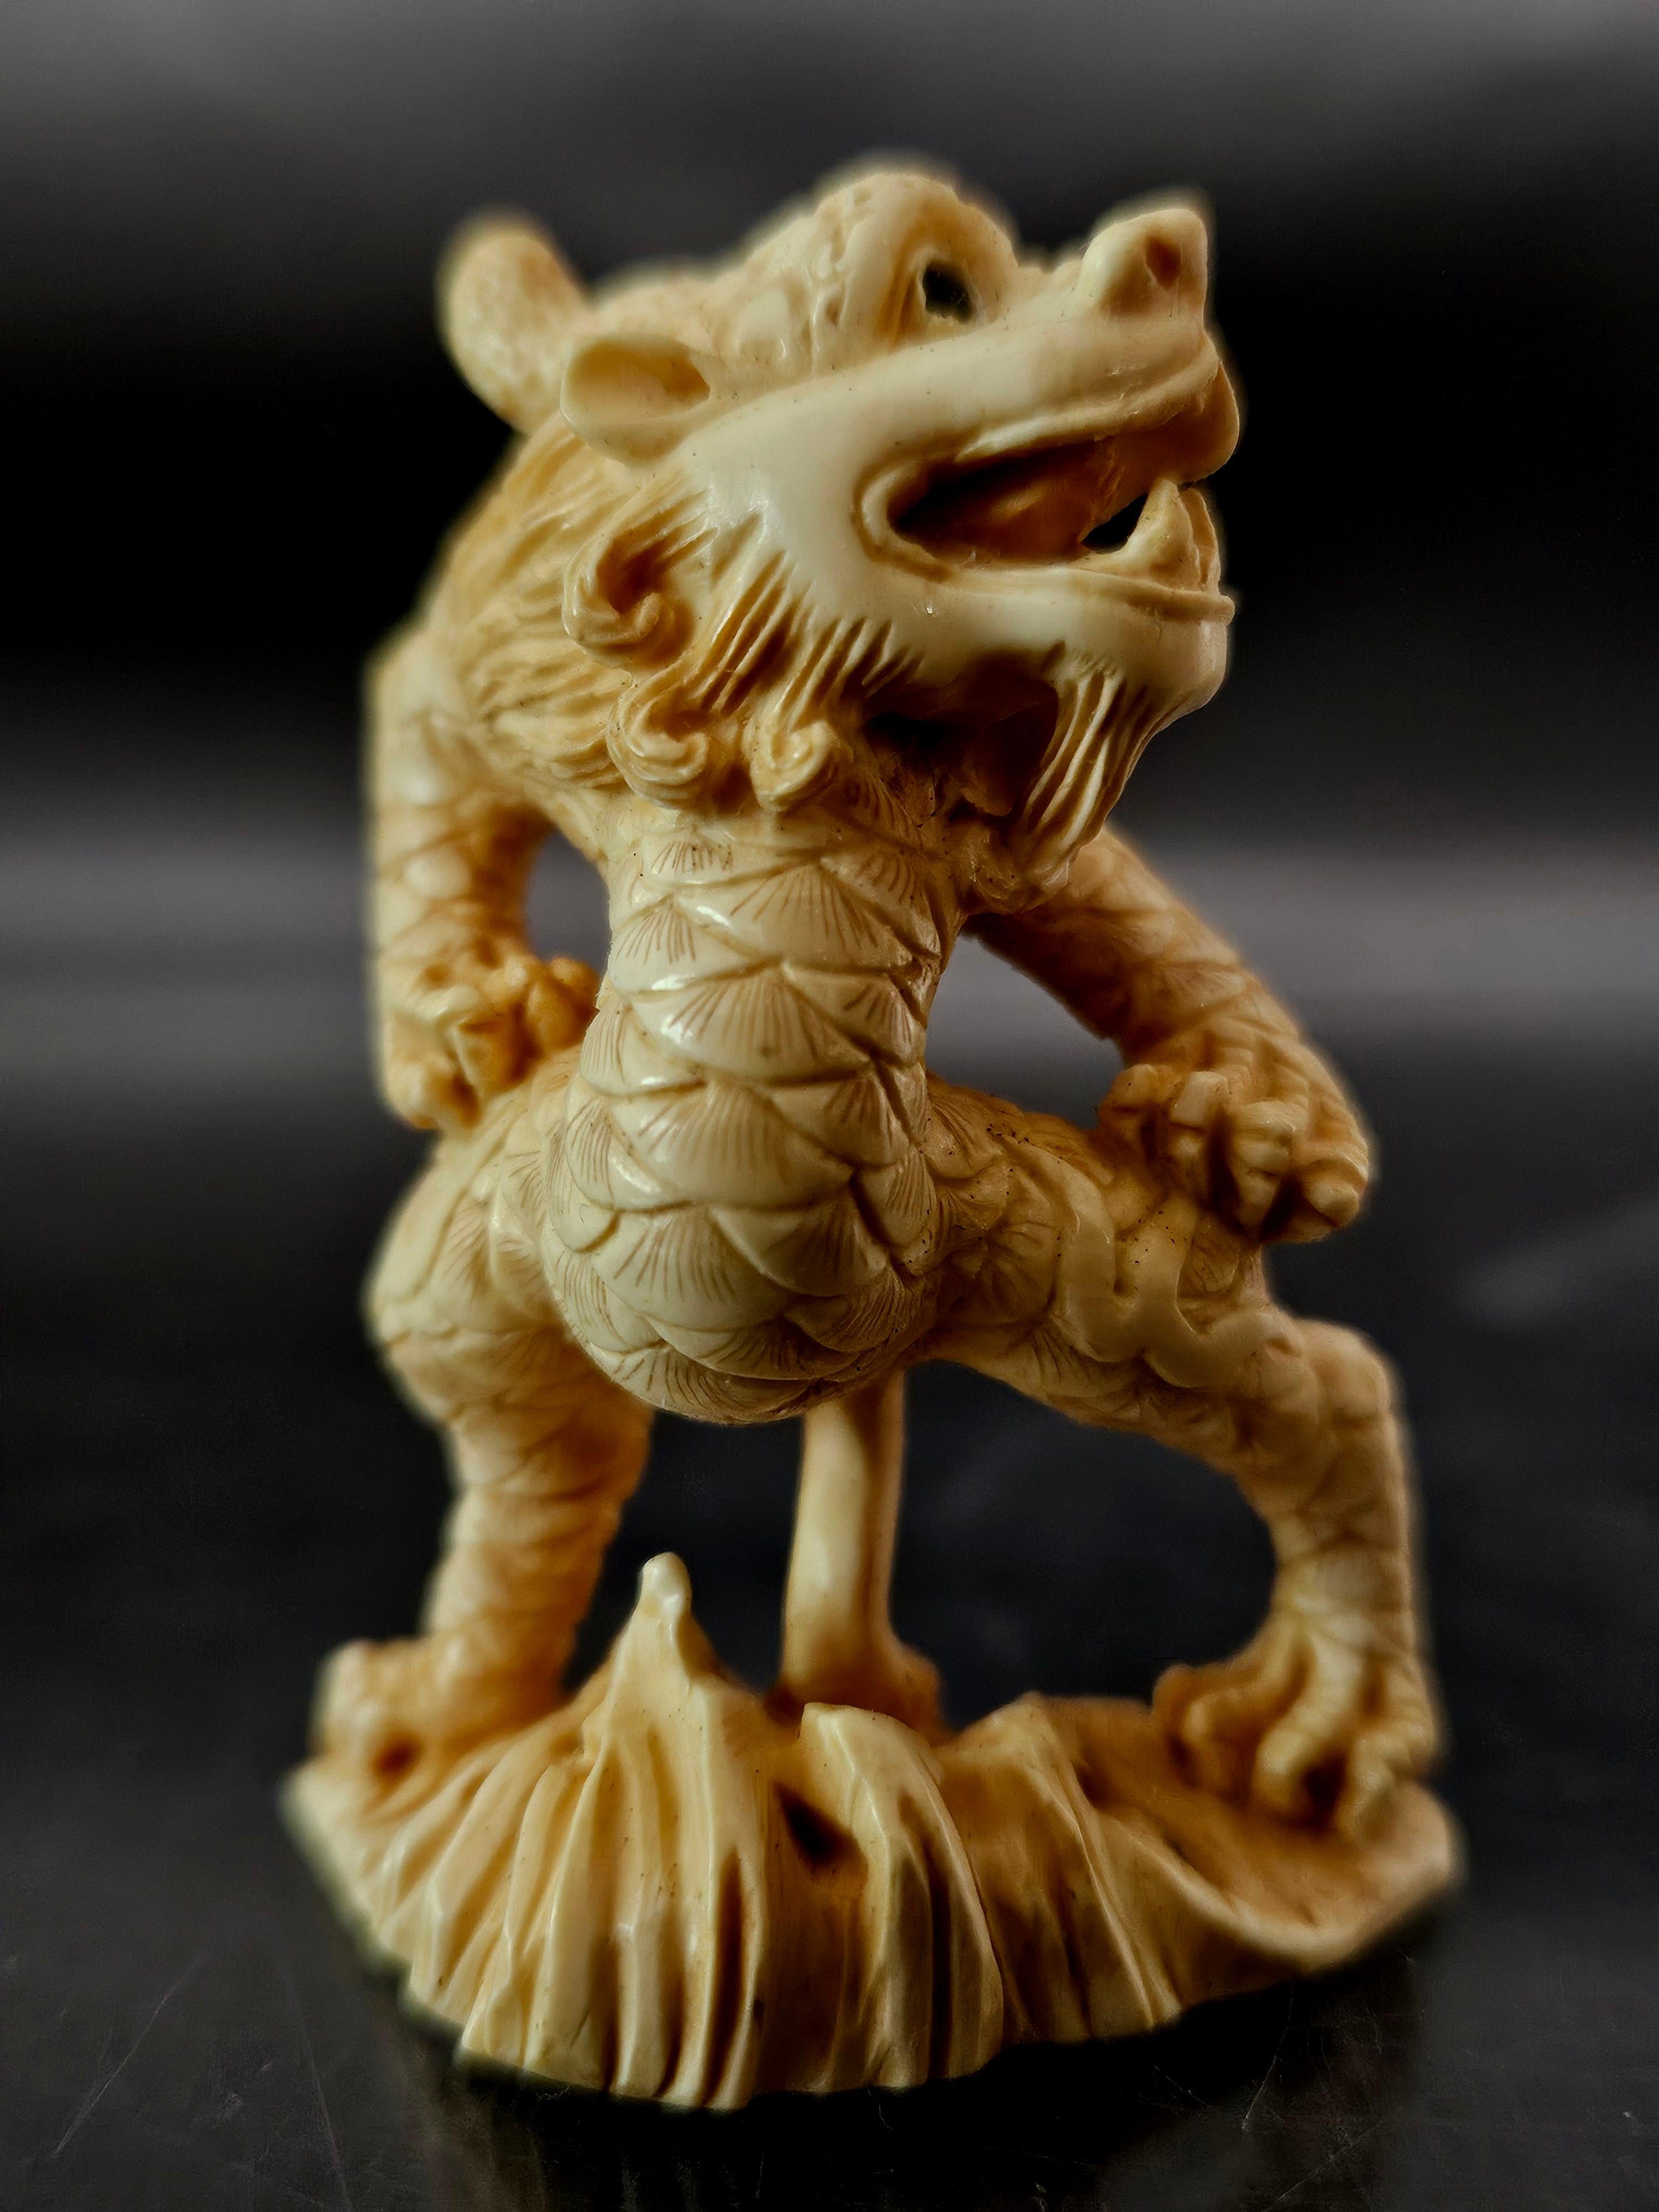 Japanese Carved Netsuke Humanoid Dragon-Signed by Yamada Hojitsu法實, Edo Period (1825–1872), Ric.NA001

This item is 1.5